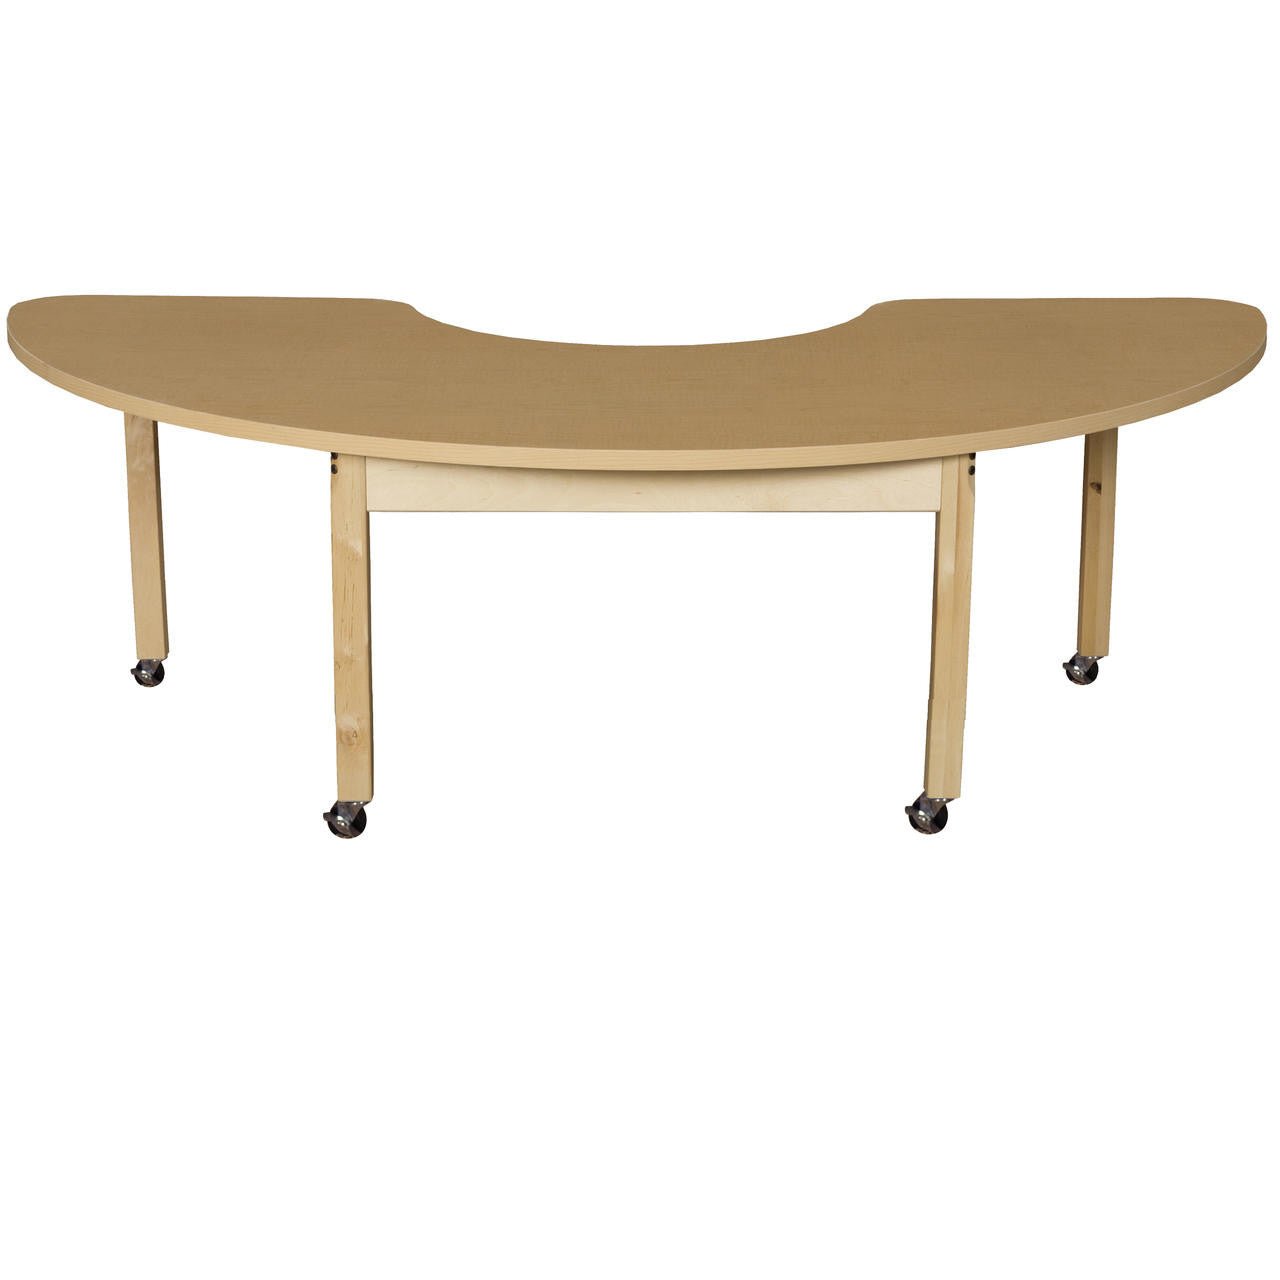 Mobile Half Circle High Pressure Laminate Table with Hardwood Legs- 22"